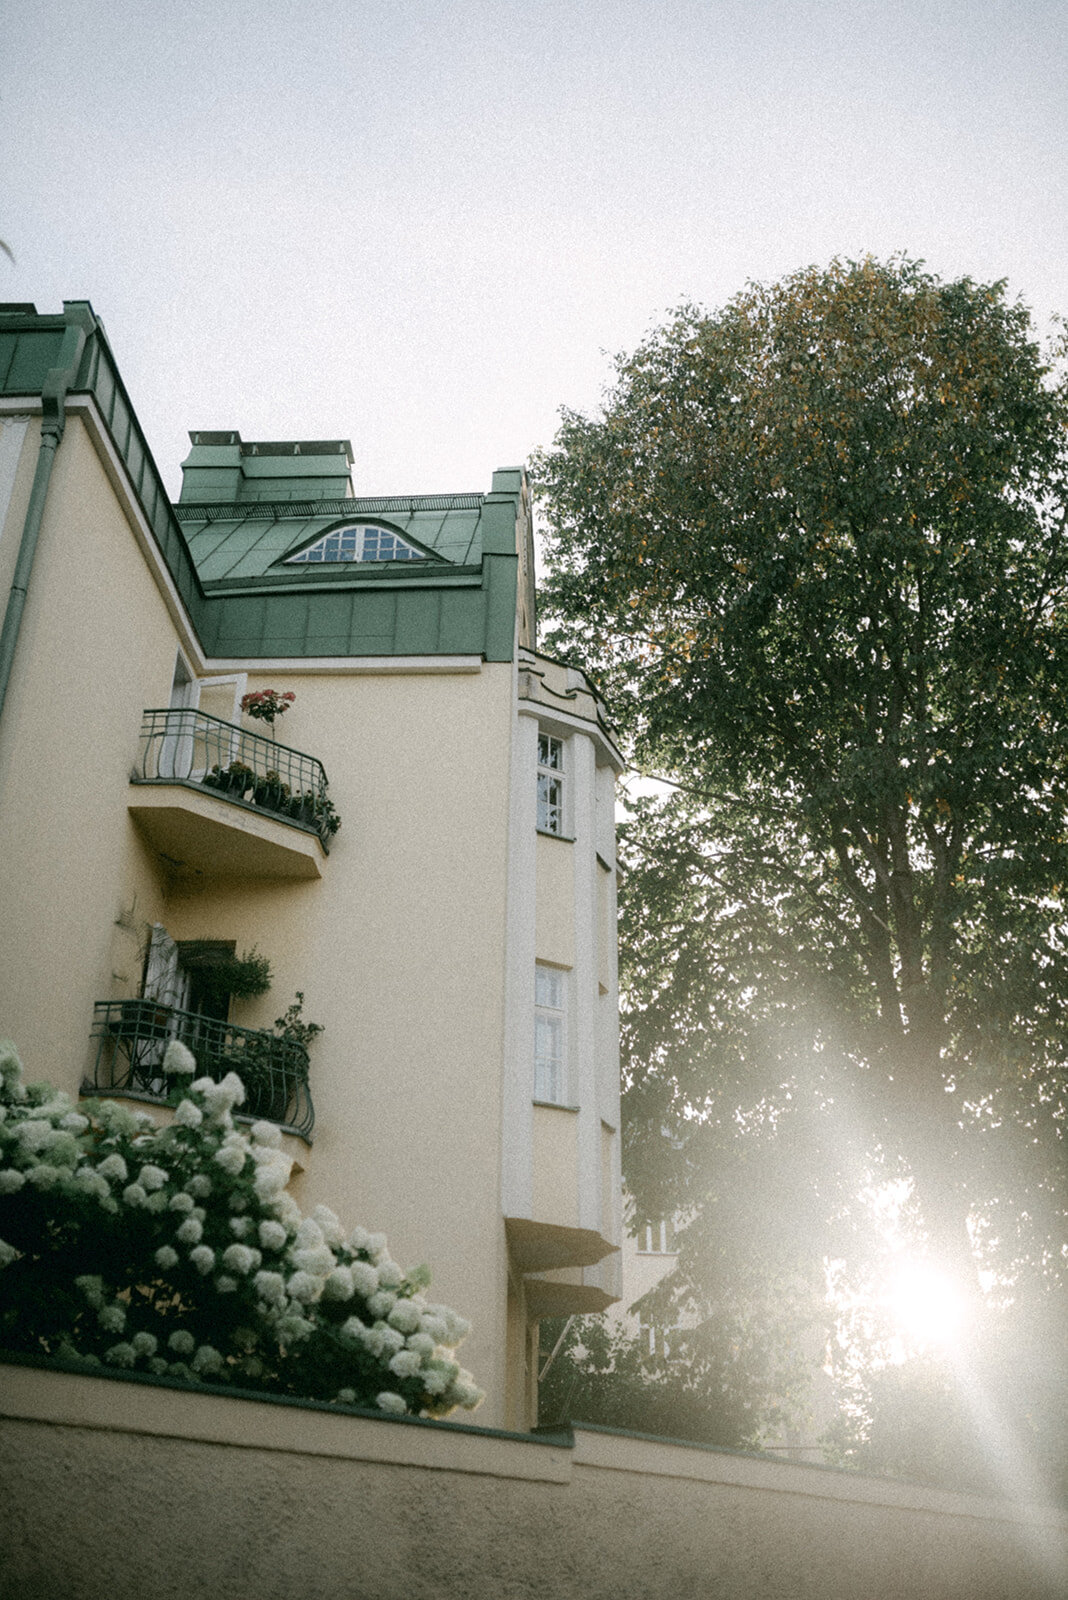 A photograph of art nouveaou buildings in Helsinki by photographer Hannika Gabrielsson